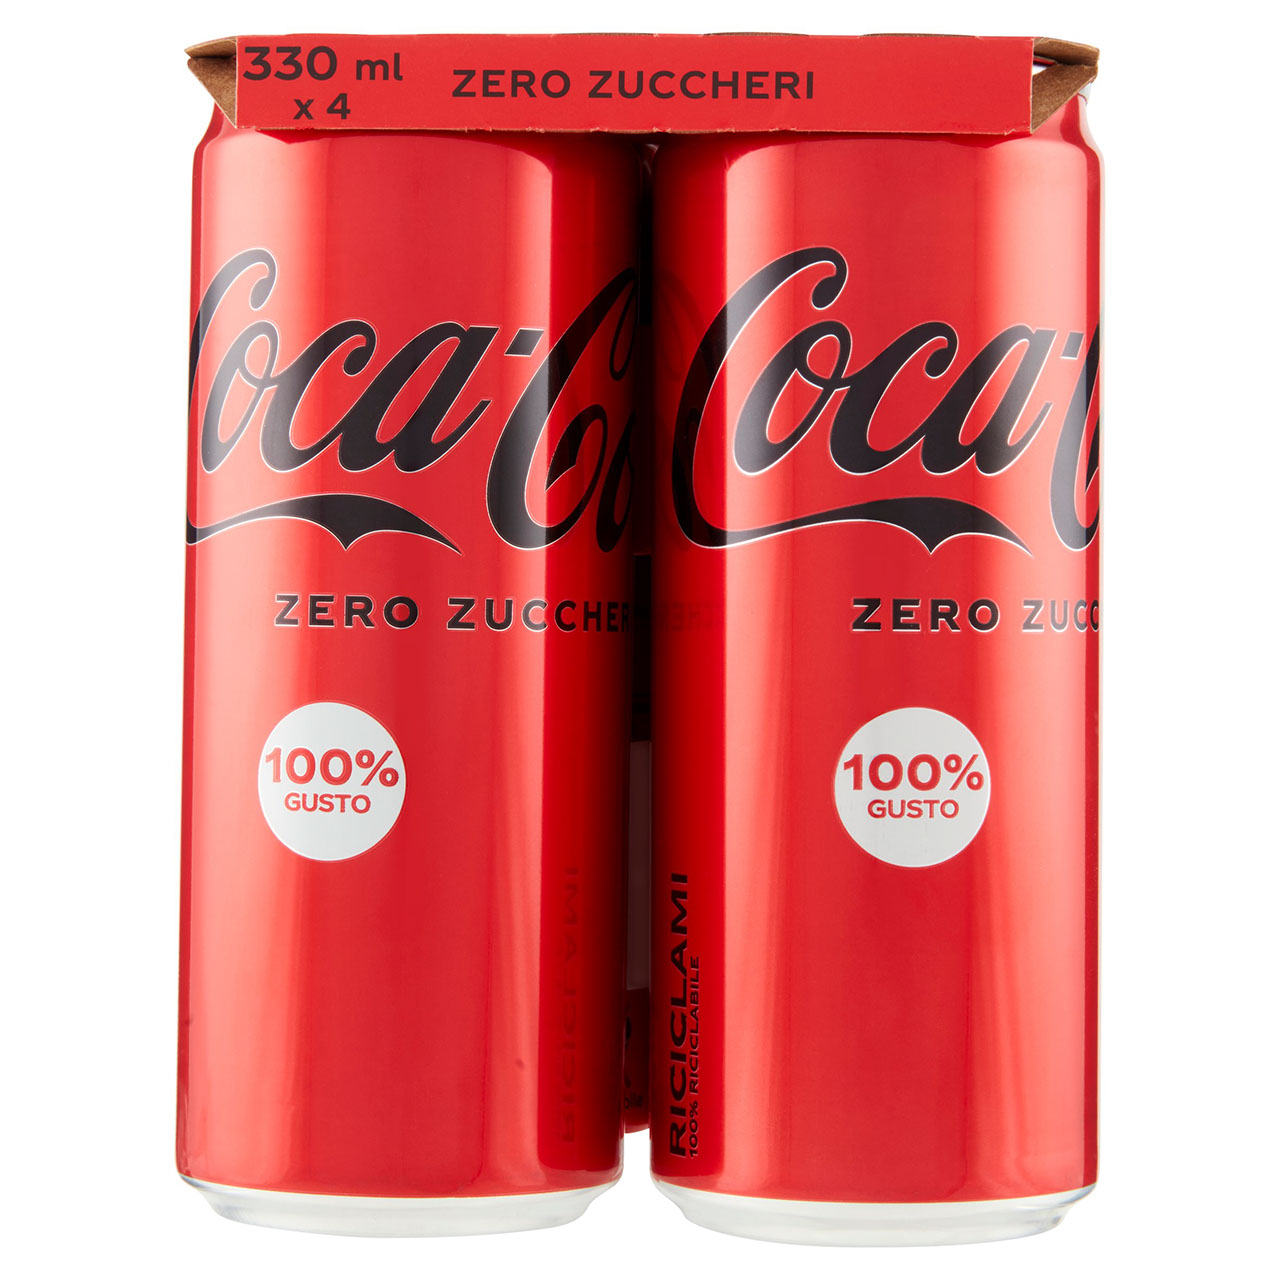 Coca cola Zero lattina 330ml x 4